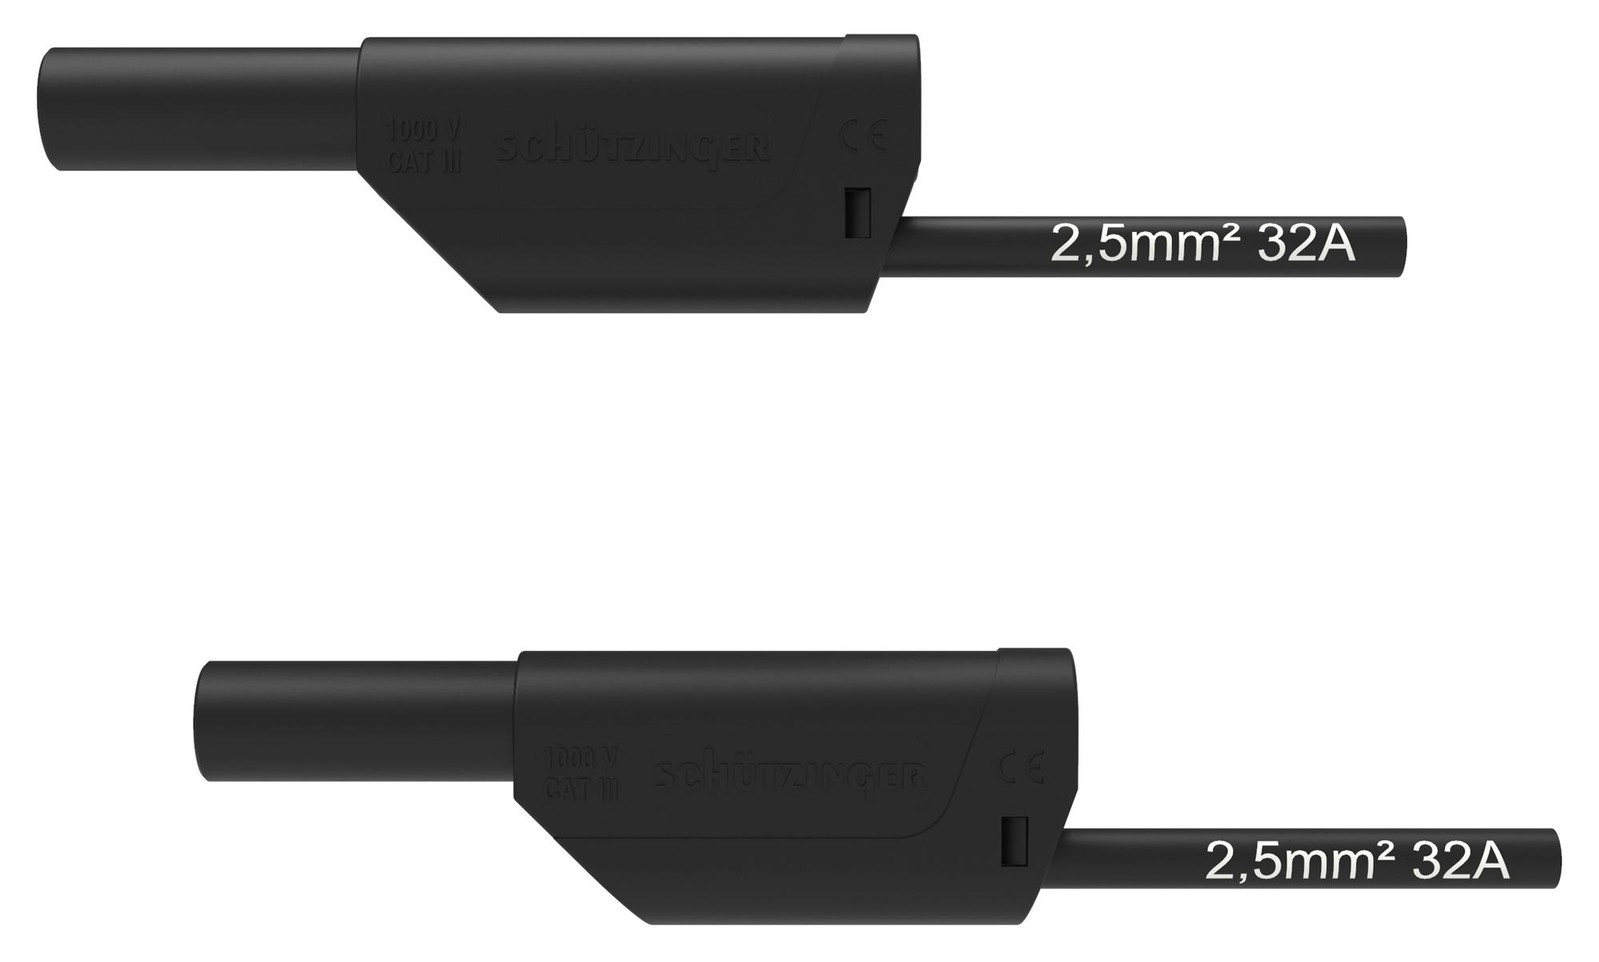 Schutzinger Di Vsfk 8700 / 2.5 / 100 / Sw 4mm Banana Plug-Sq, Shrouded, Black, 1M